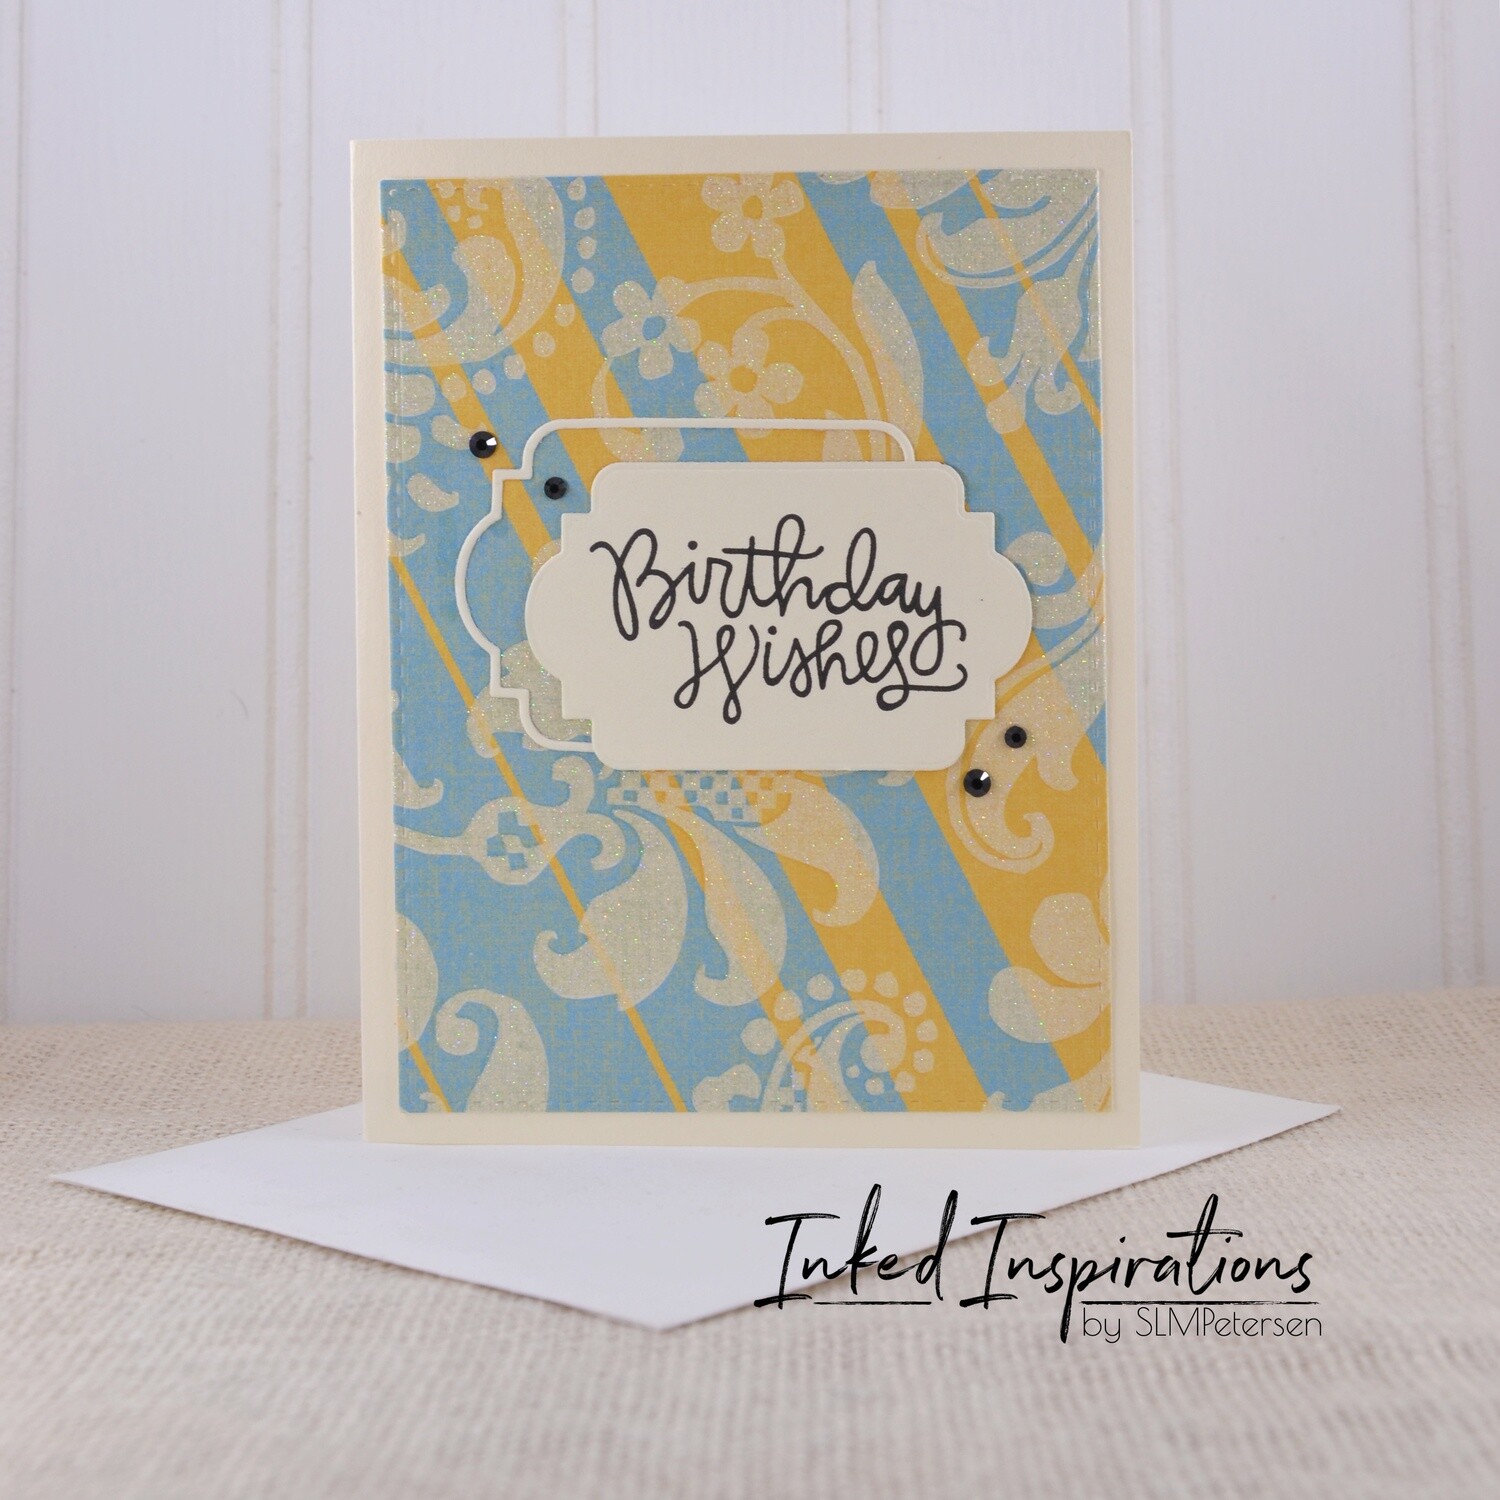 Birthday Wishes - Stipes & Glitter Foral Pattern